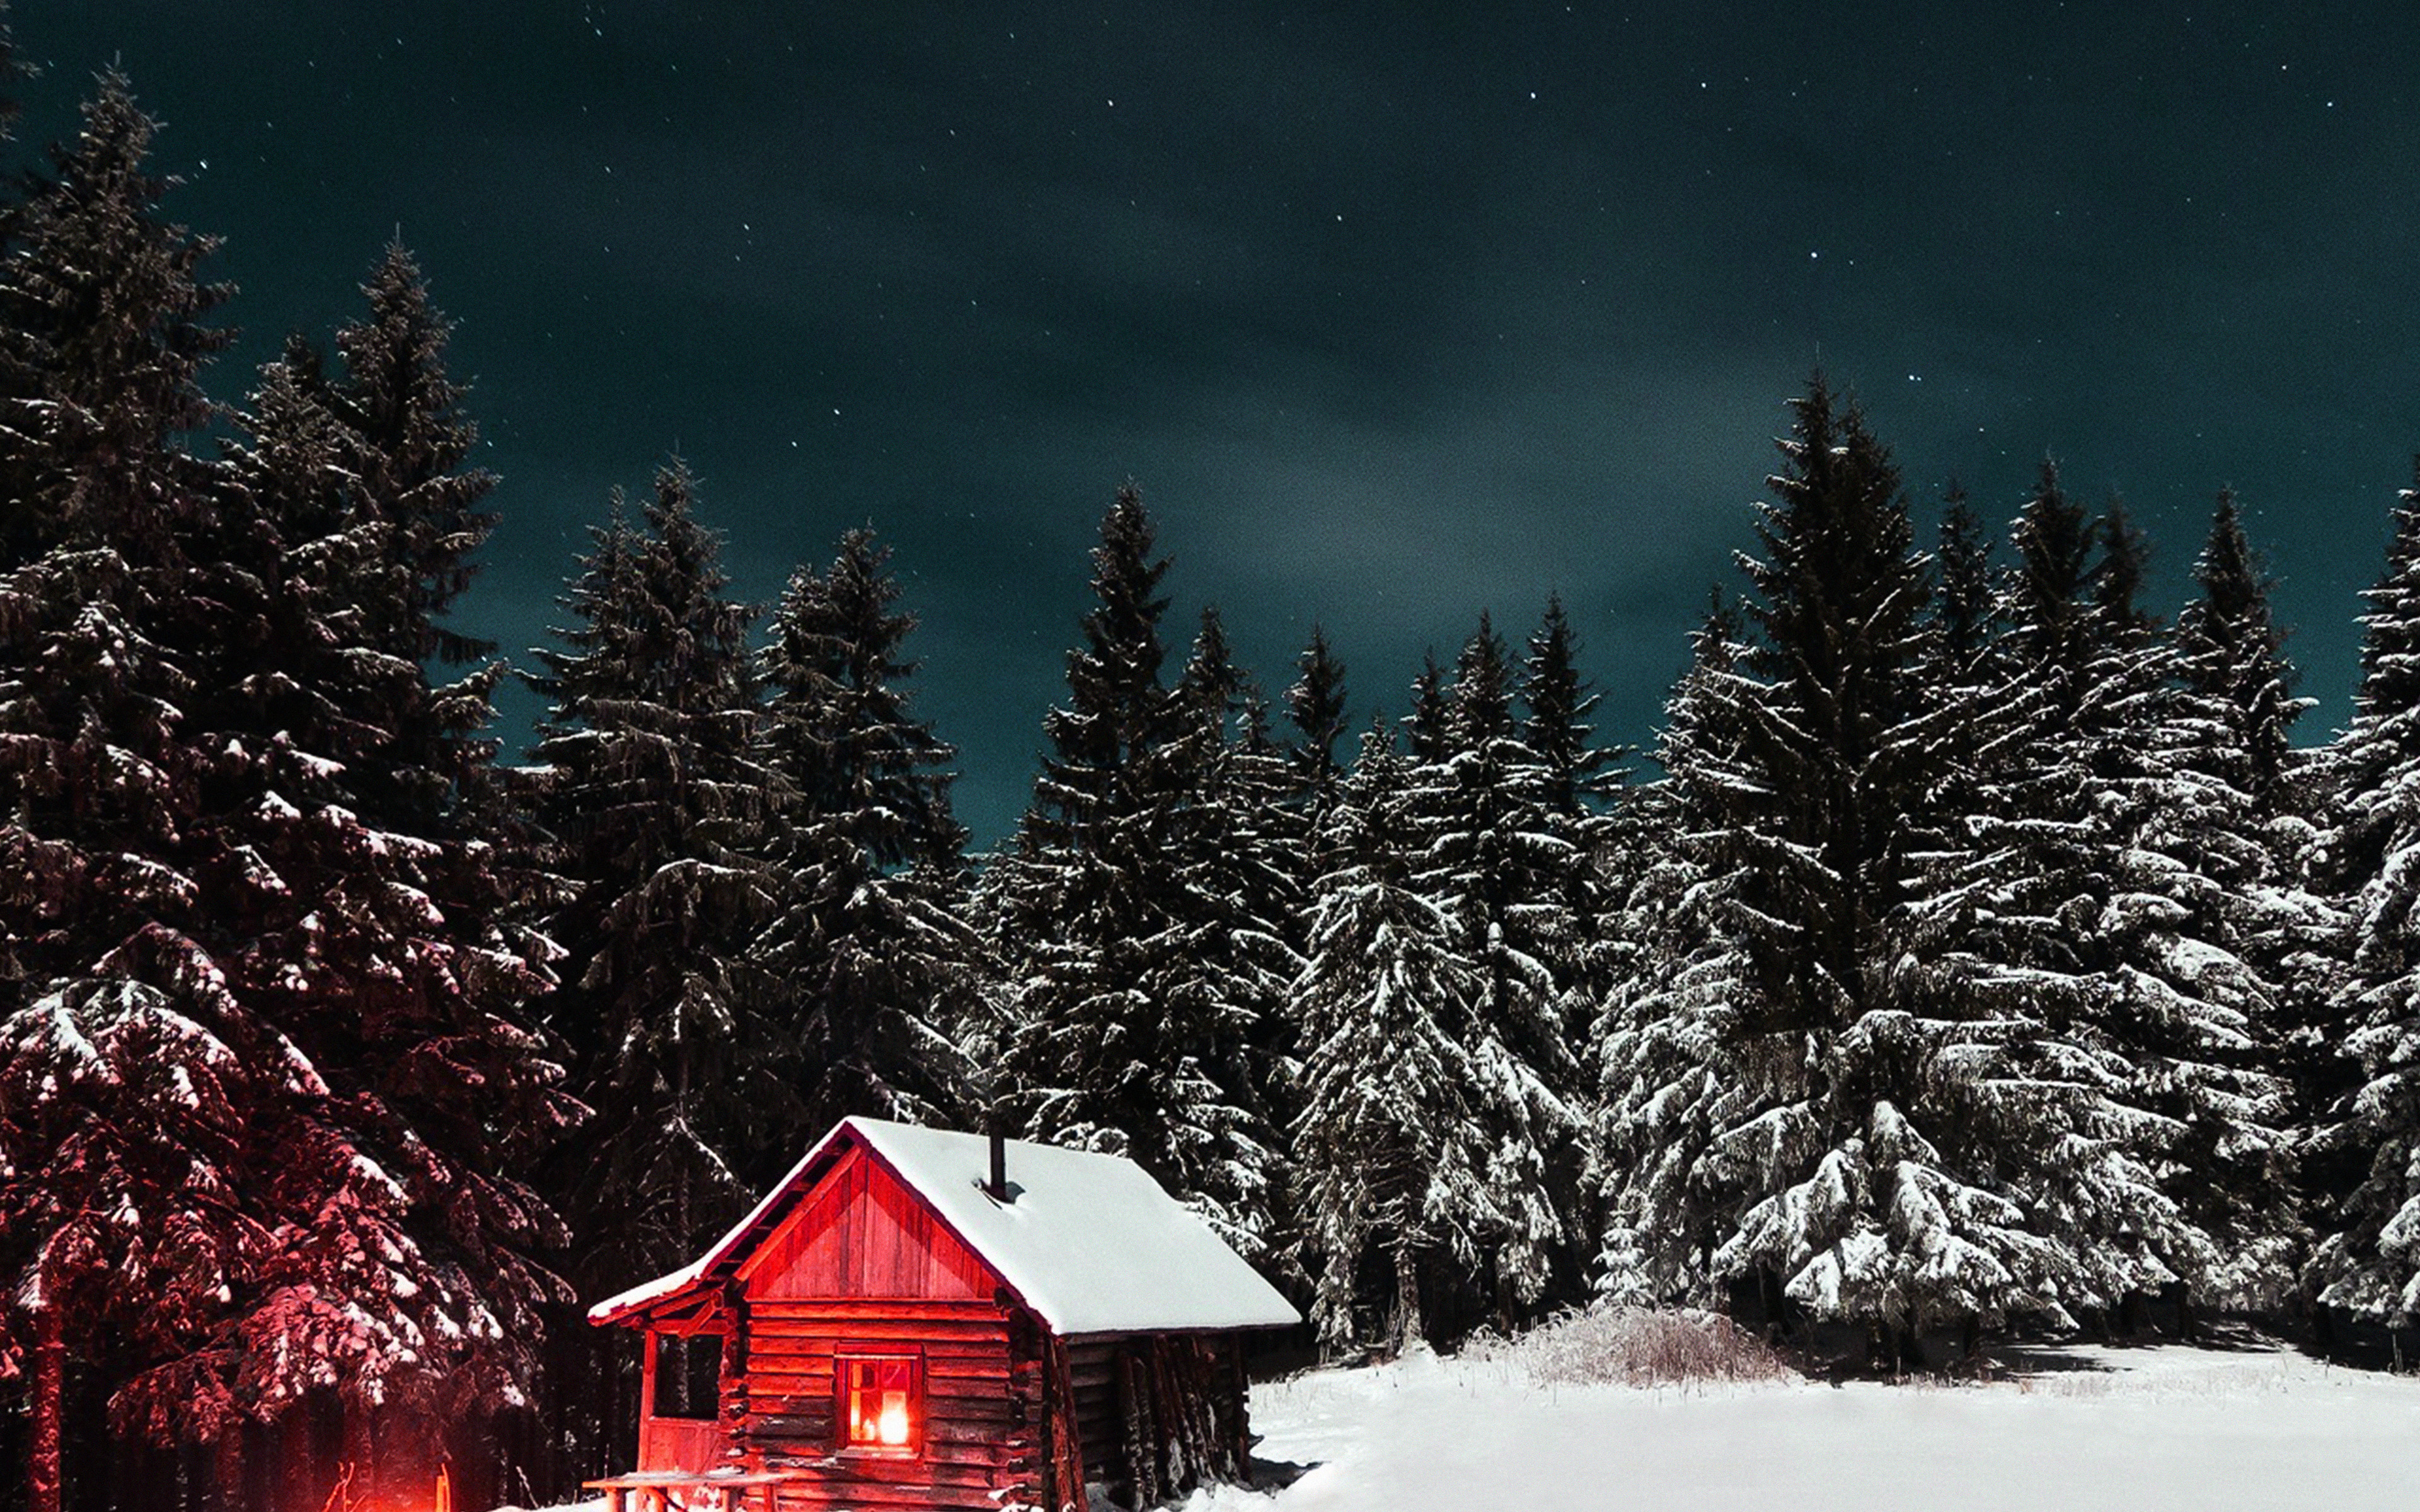 wallpaper for desktop, laptop. winter house night sky christmas starry